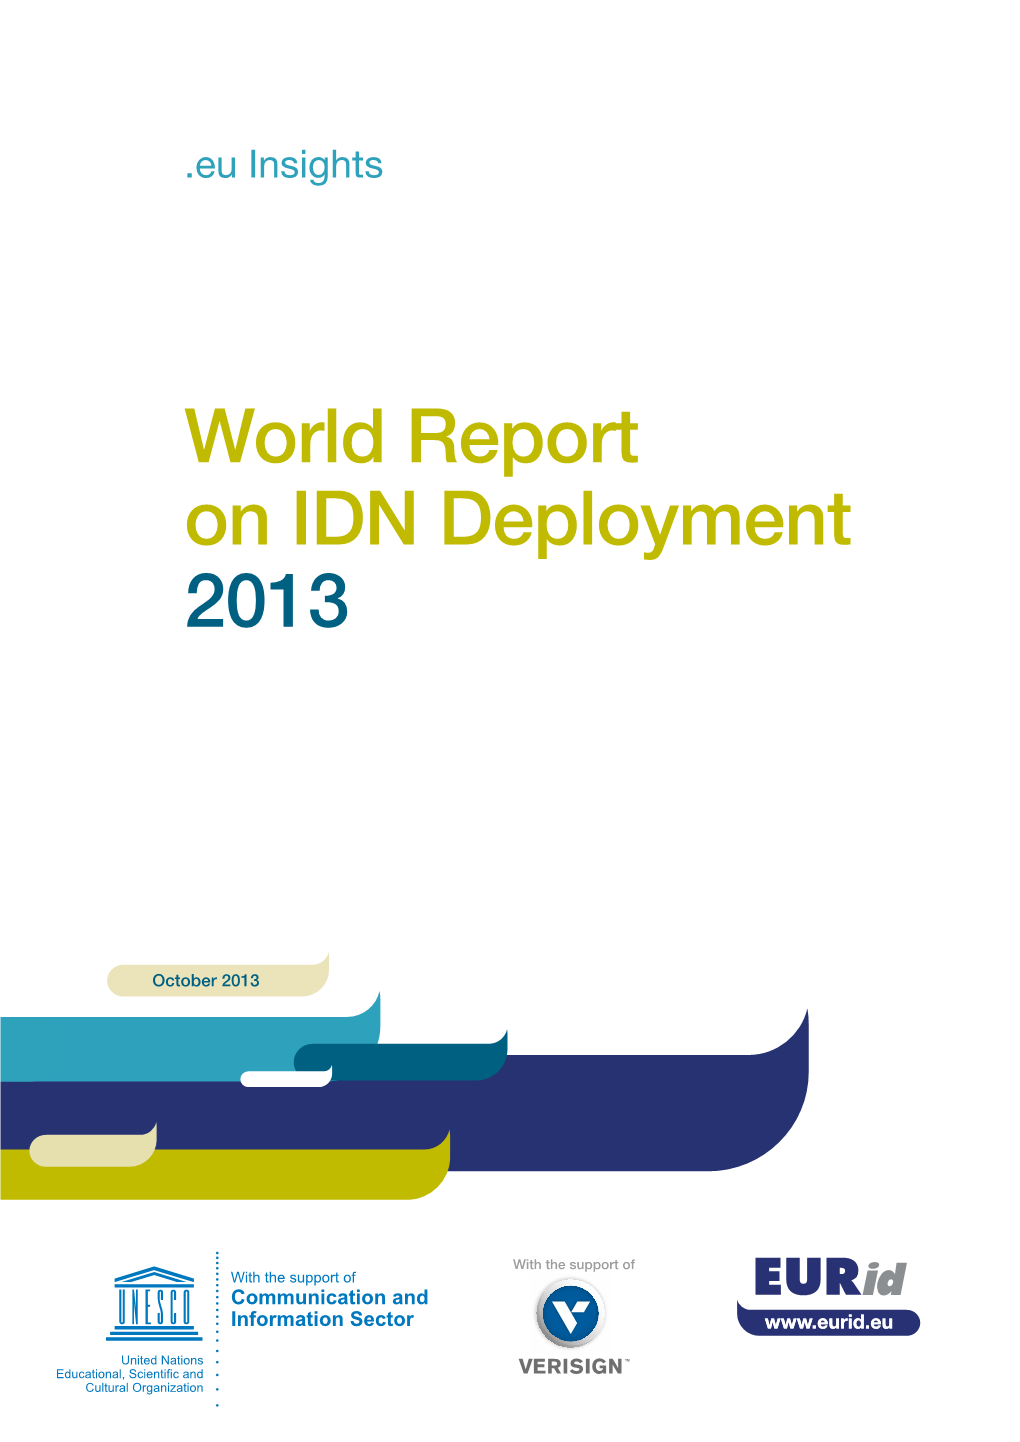 World Report on IDN Deployment 2013